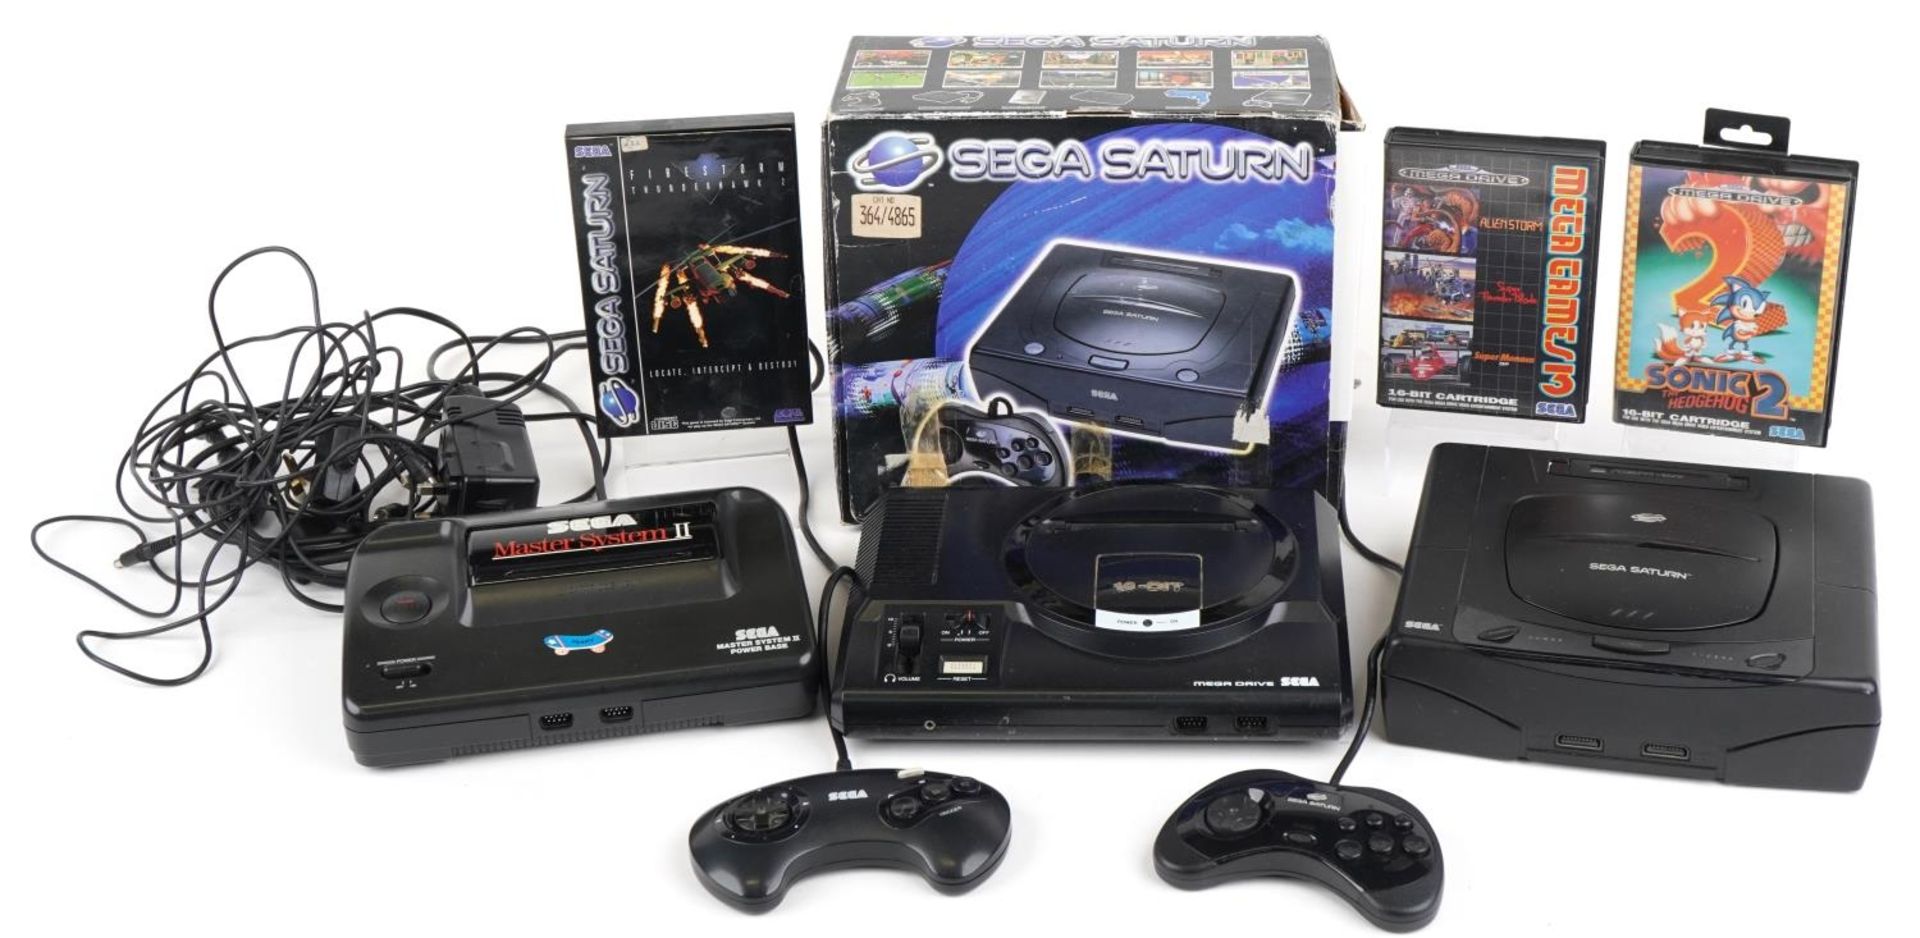 Vintage Sega games consoles and games including Sega Saturn with box, Sega Master System II and Sega